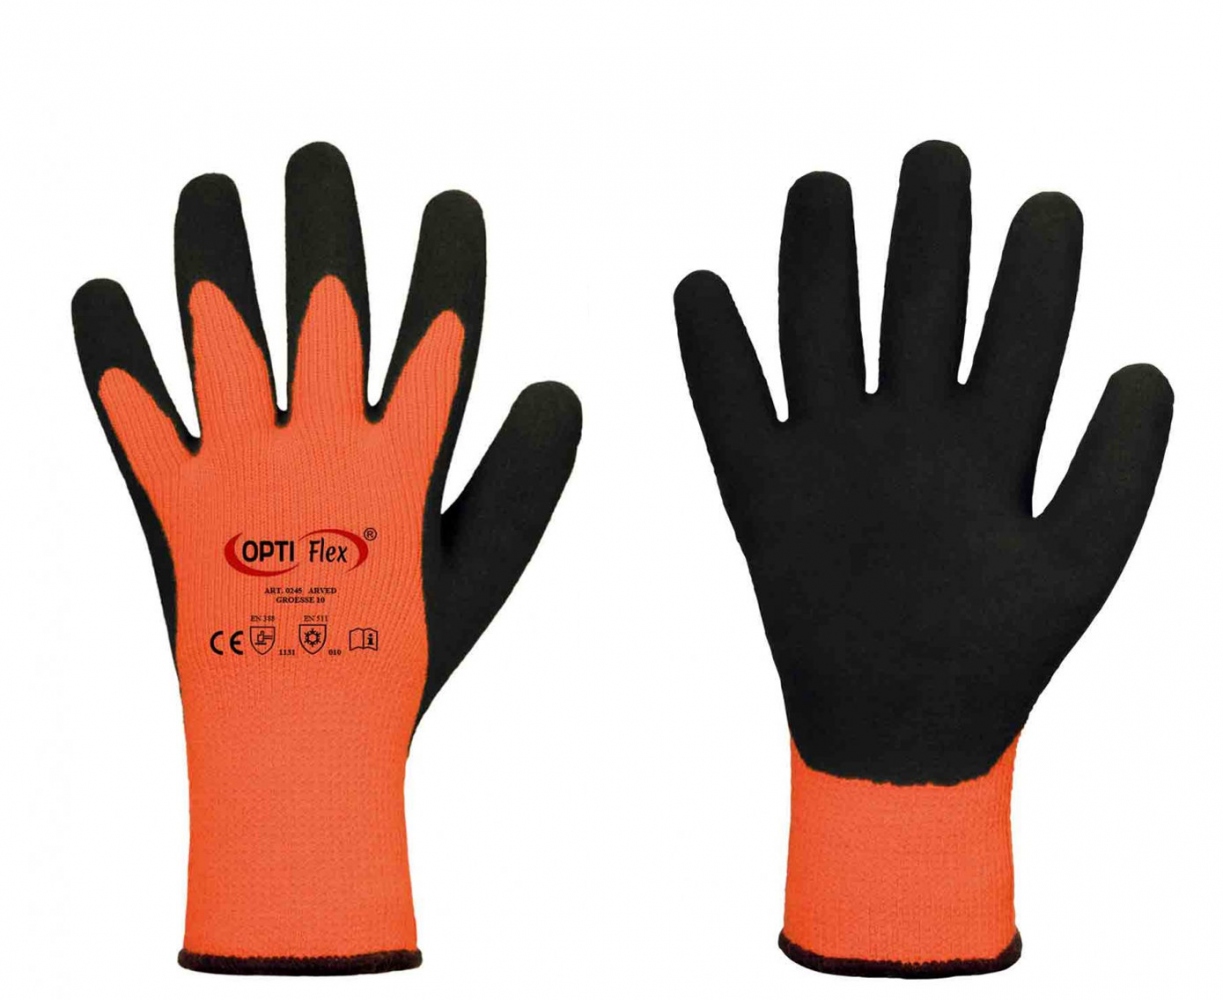 pics/Feldtmann 2016/Handschutz/google/opti-flex-0245-arved-latex-coated-protective-gloves2.jpg